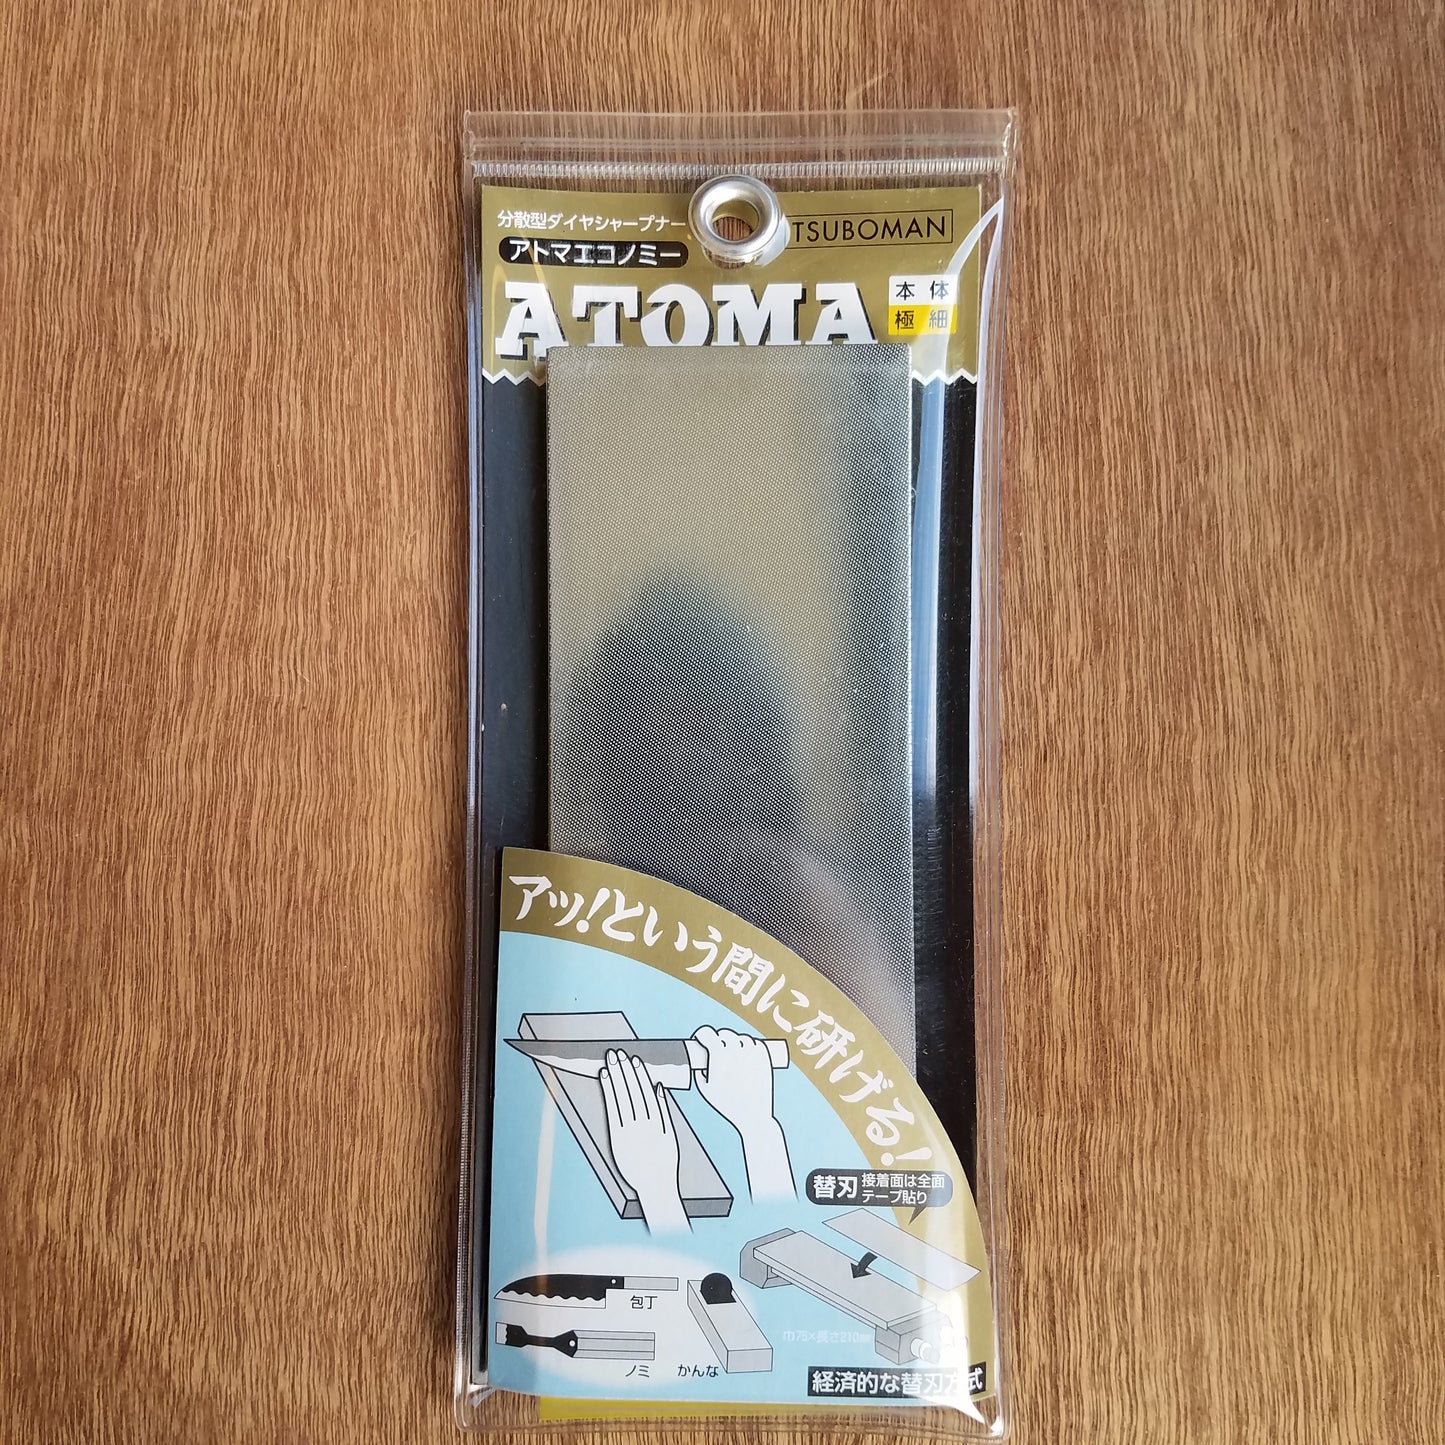 Tsuboman Atoma Diamond Plate